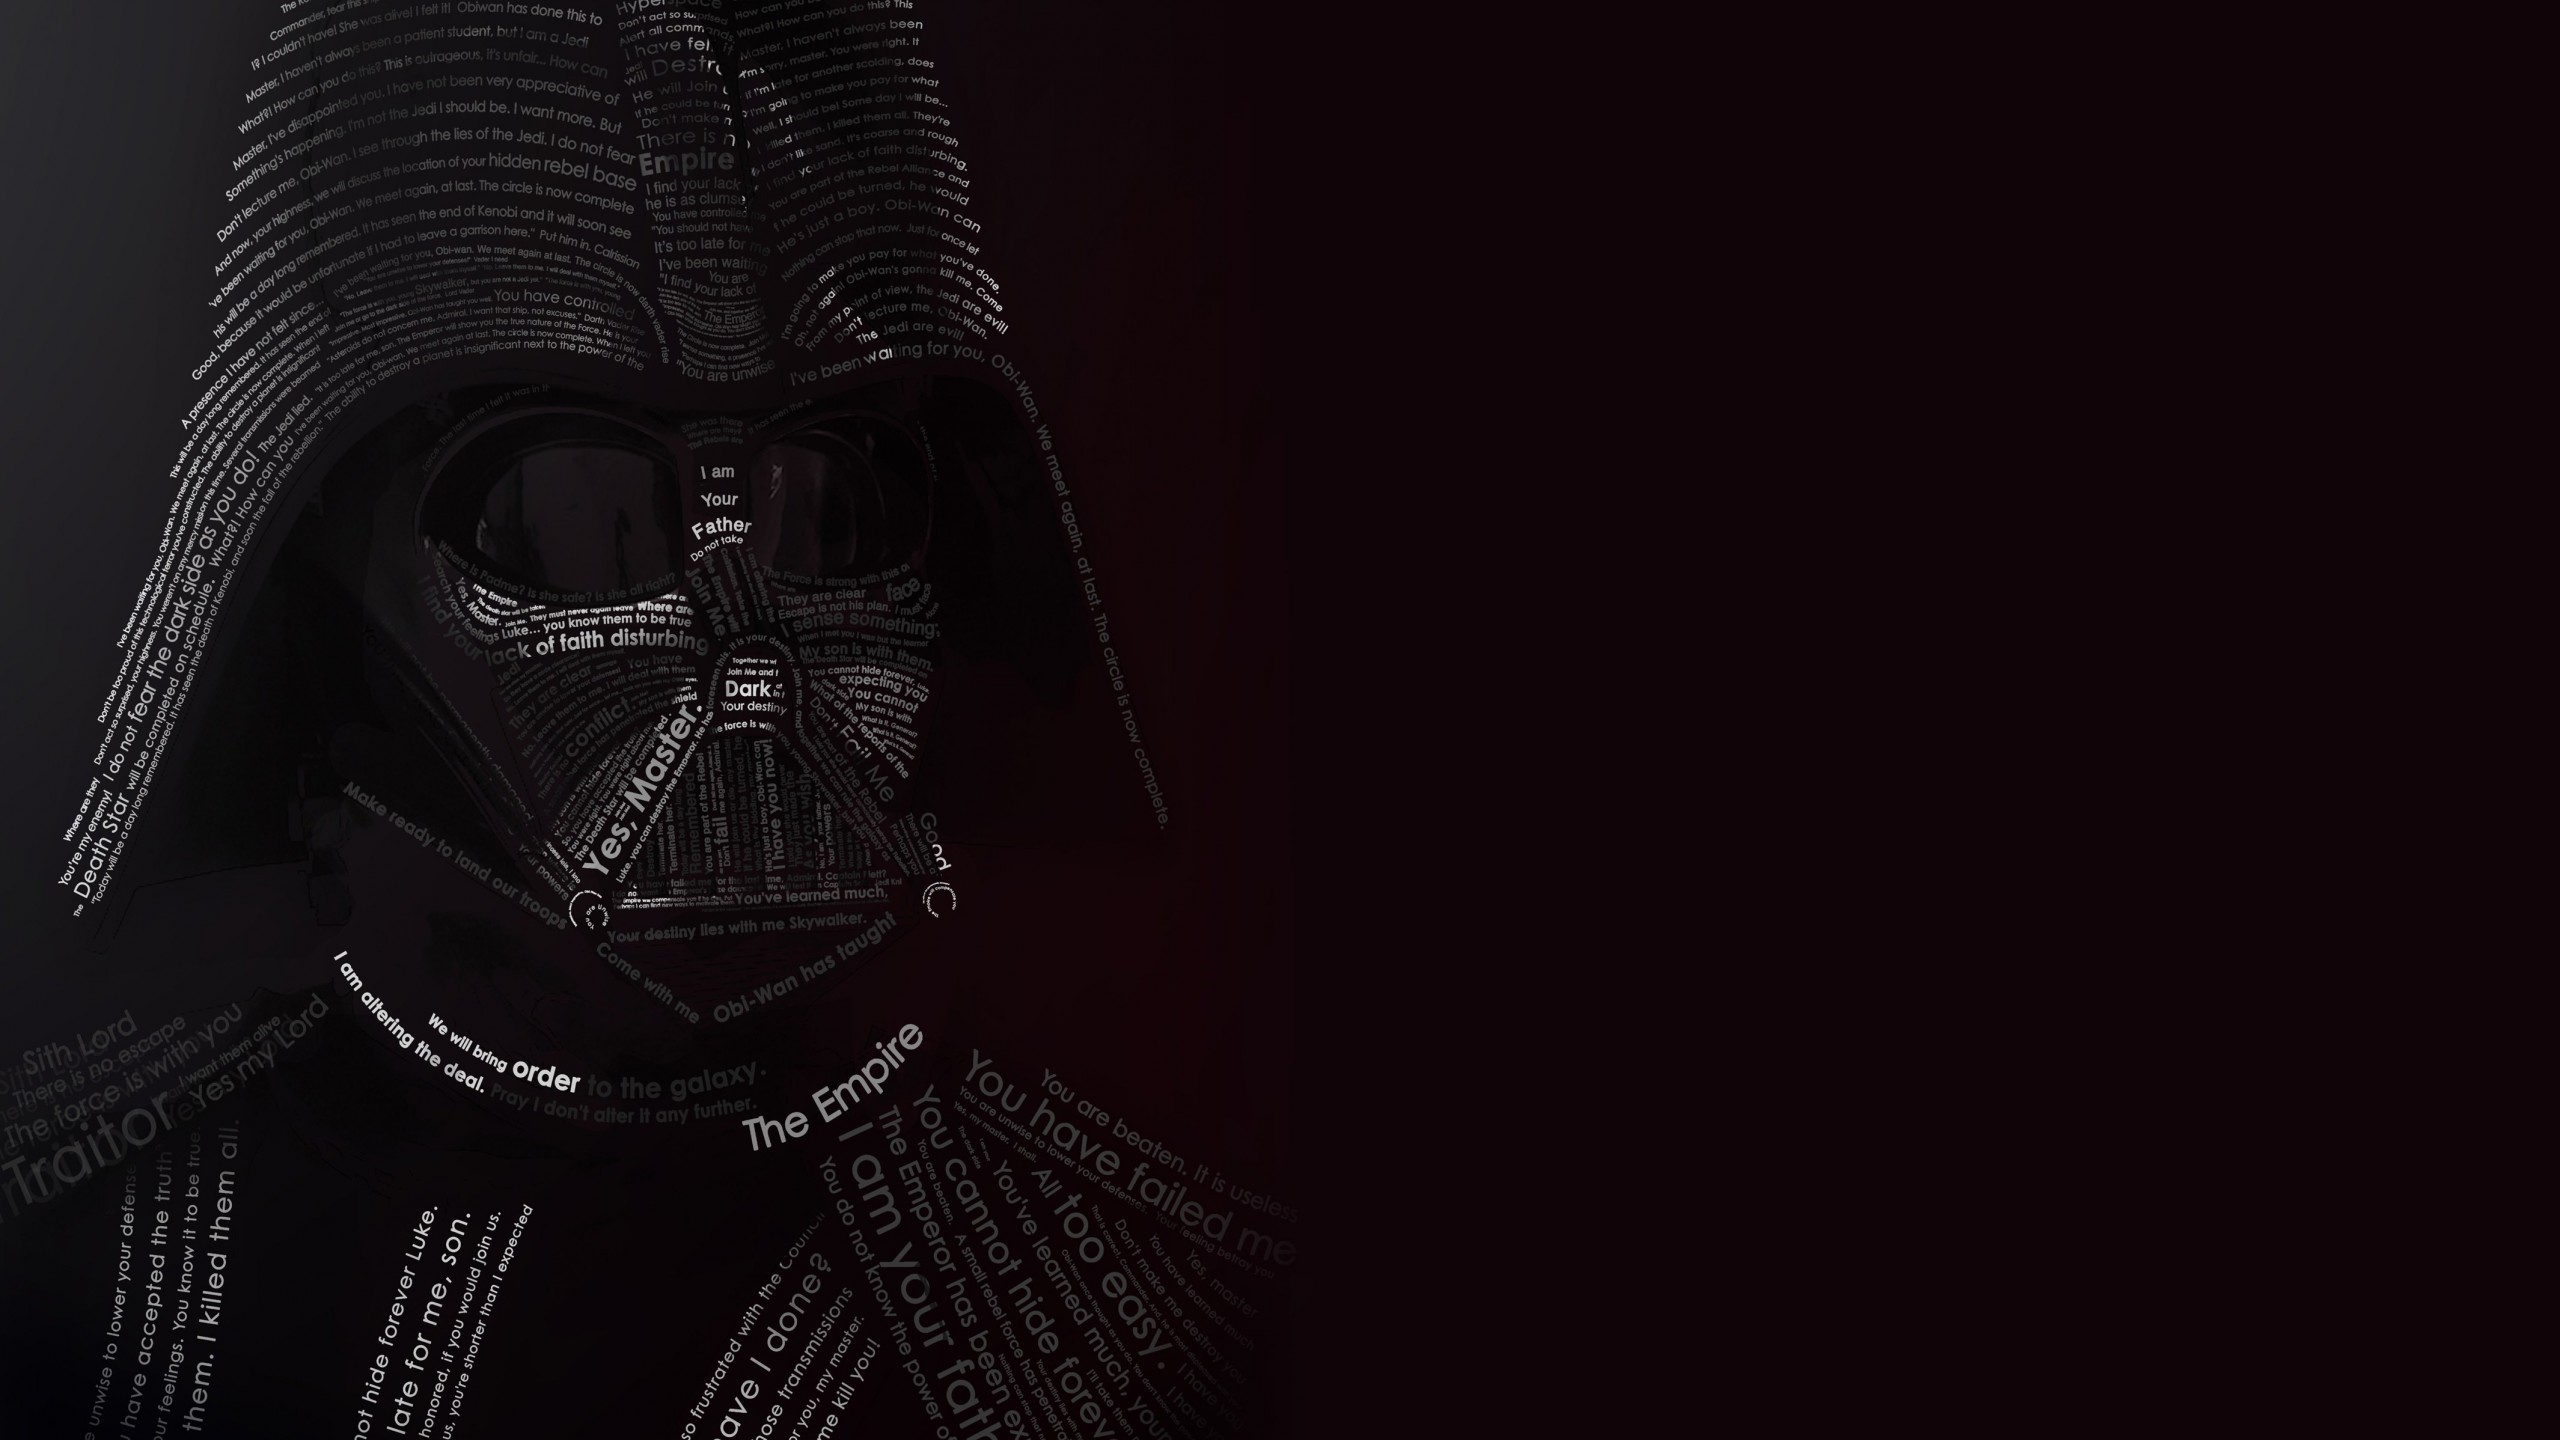 Darth Vader Typographic Portrait Wallpaper for Desktop 2560x1440